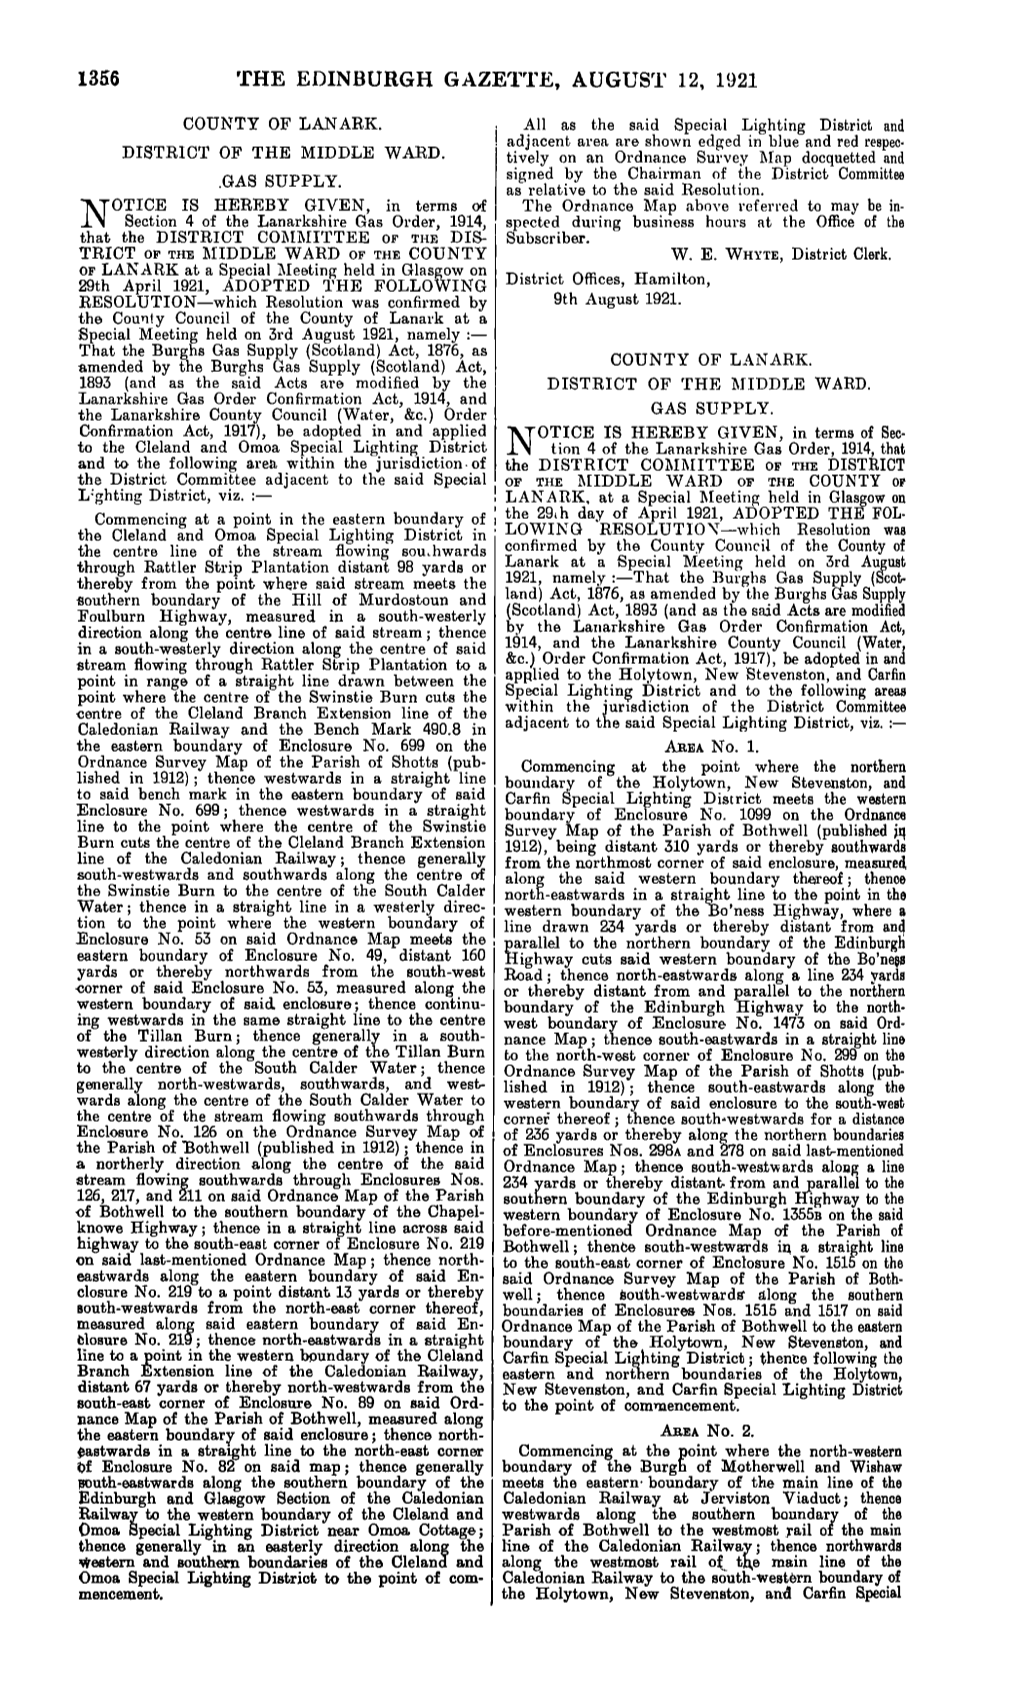 1356 the Edinburgh Gazette, August 12, 1921